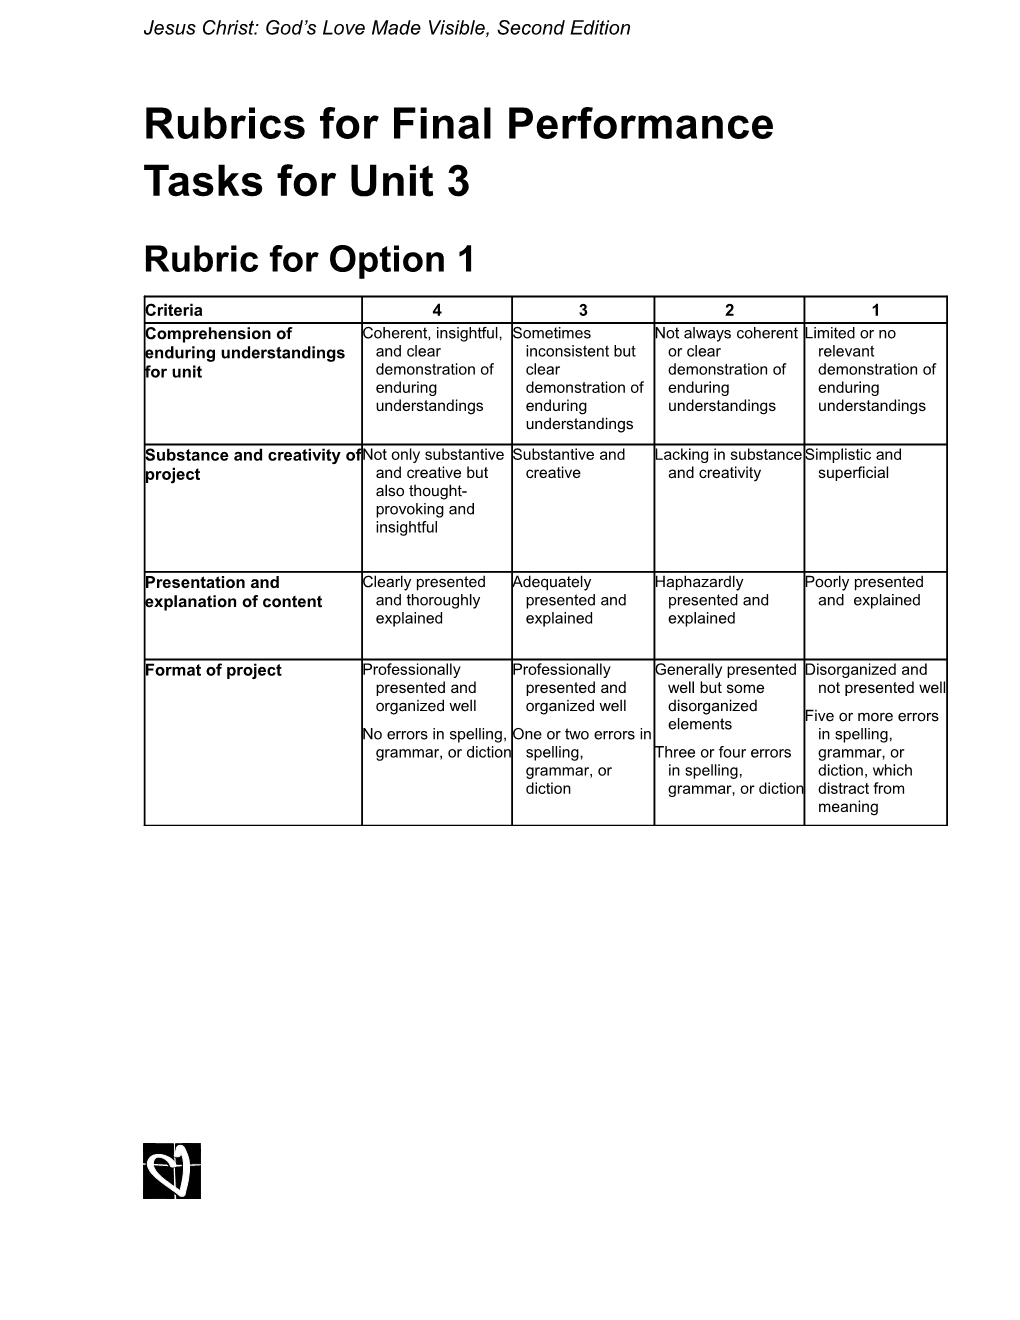 Rubrics for Final Performance Tasks for Unit 3